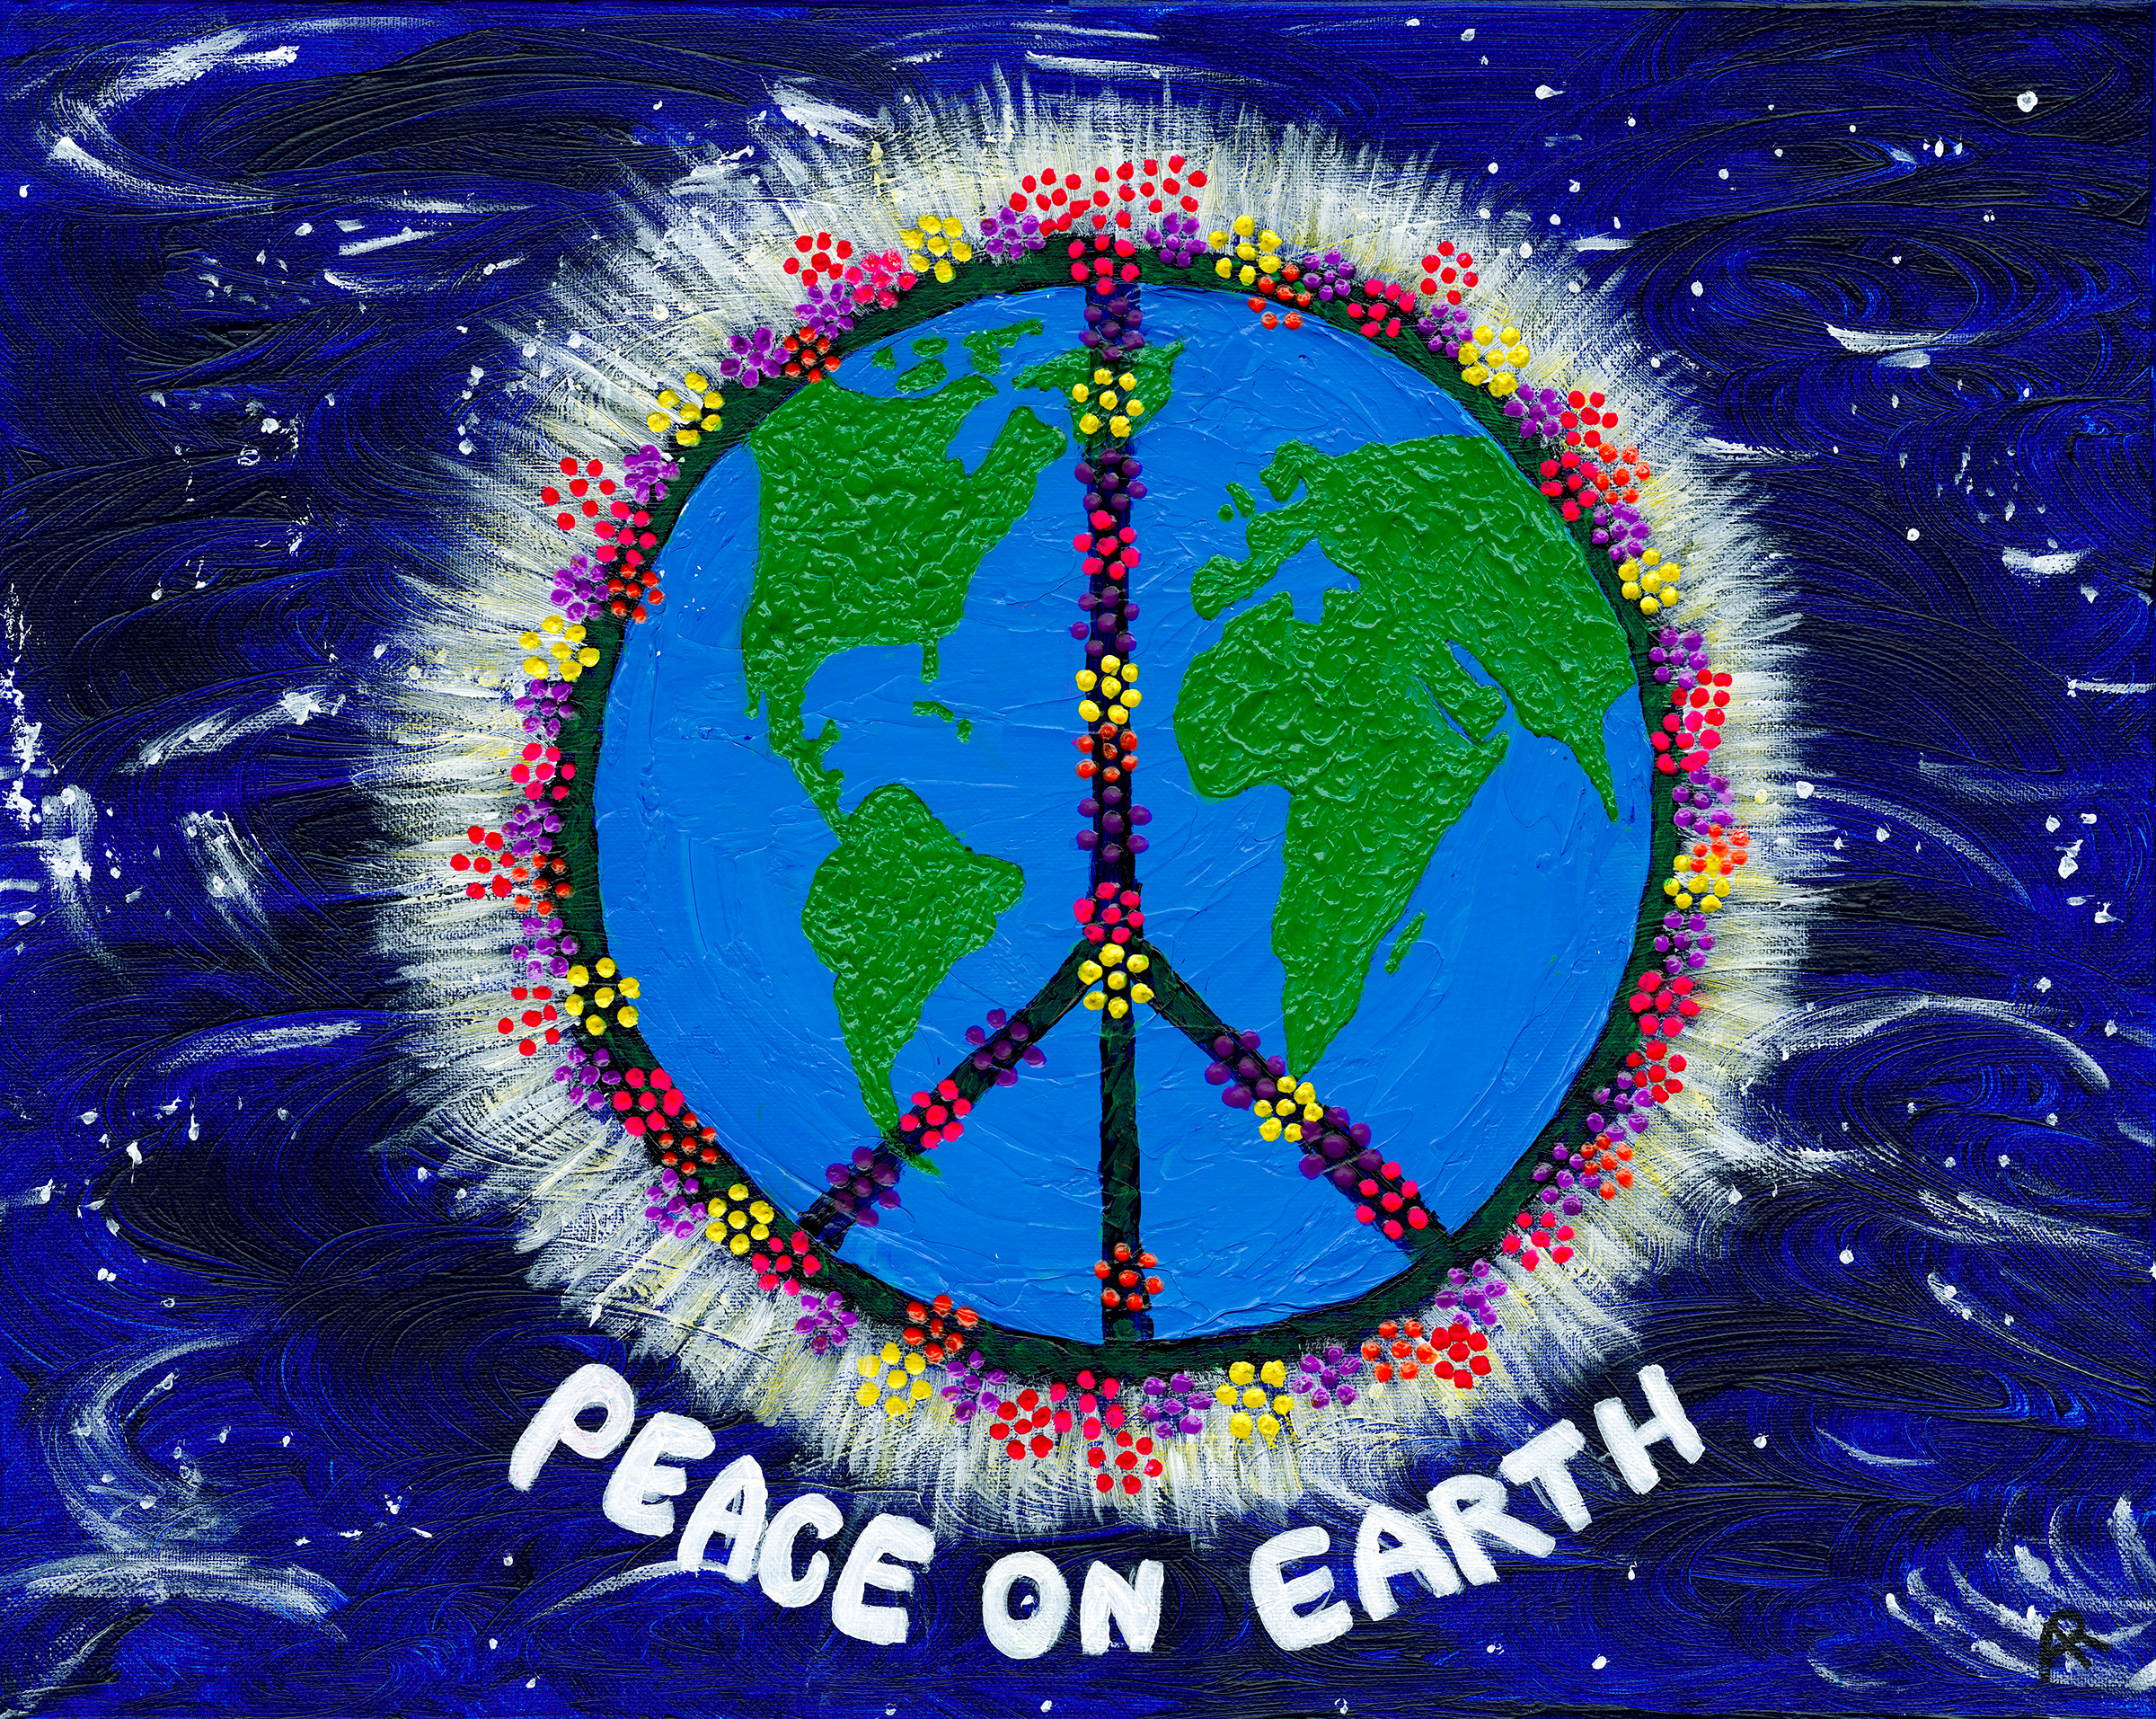 Peace on earth bhqqgg sihev8